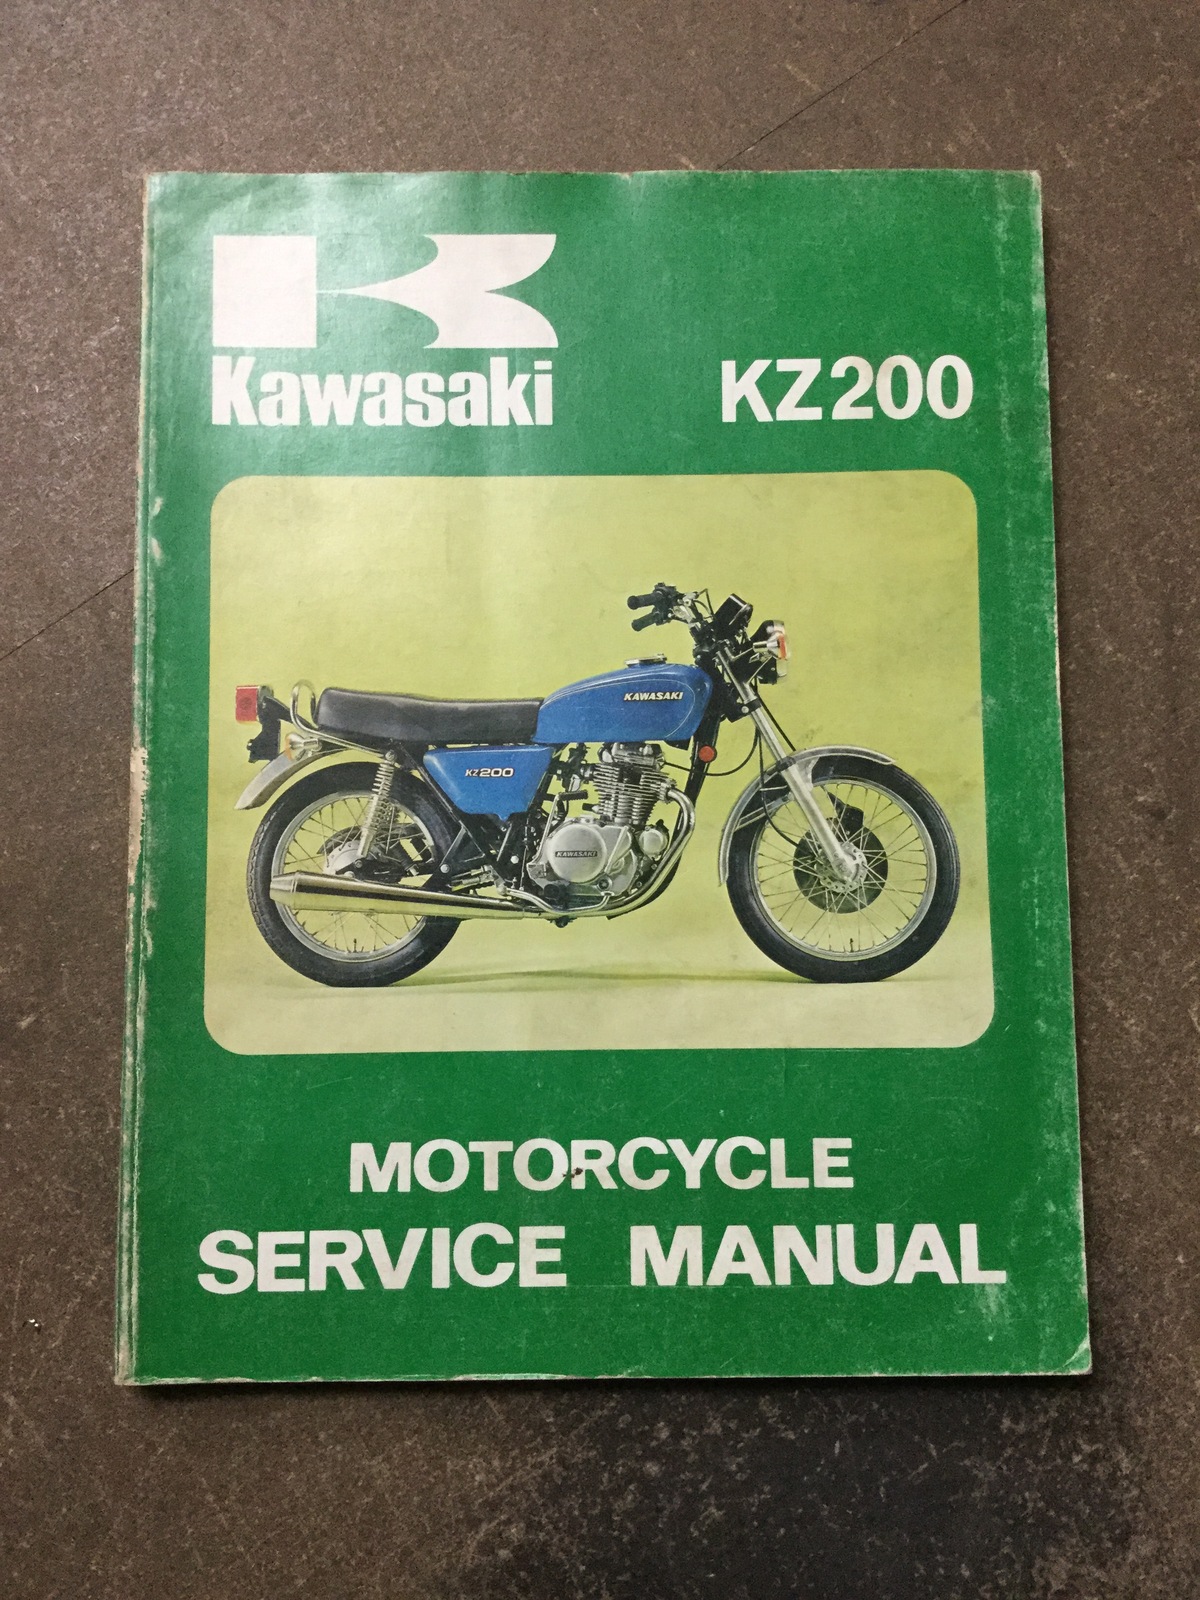 Service Manual Kawasaki